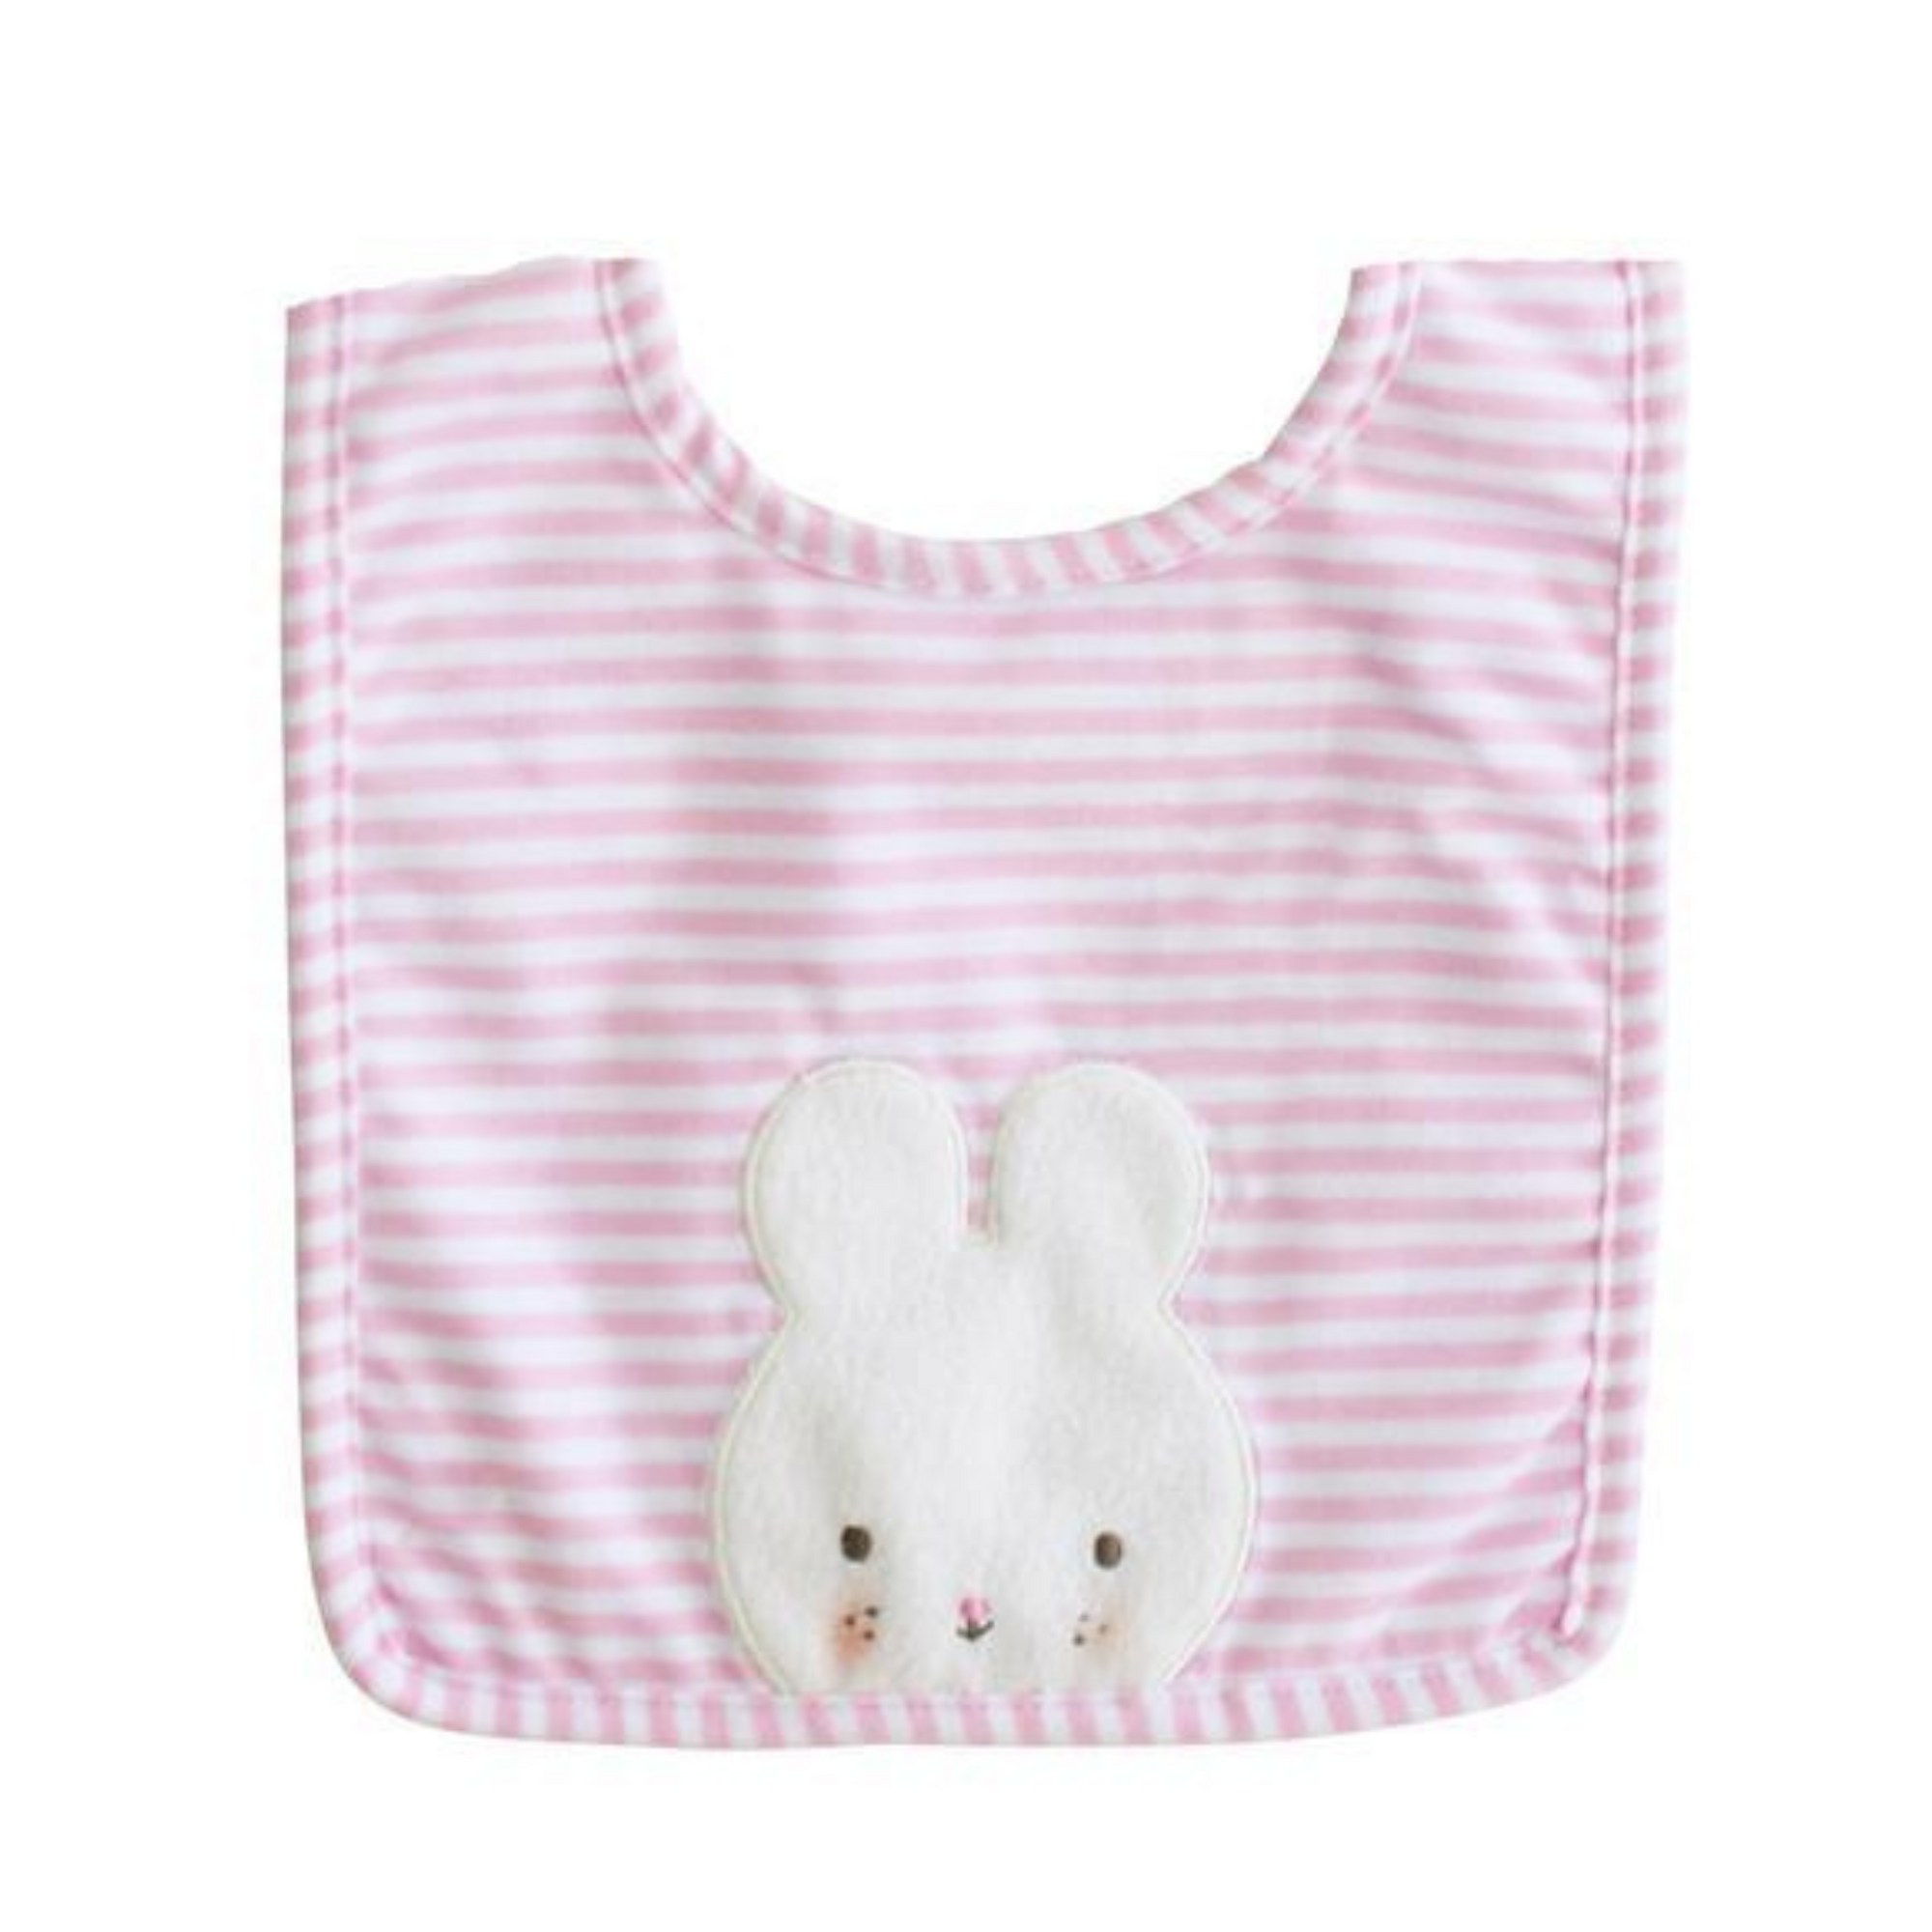 Alimrose Bib - Bunny Appliqué Pink Stripe